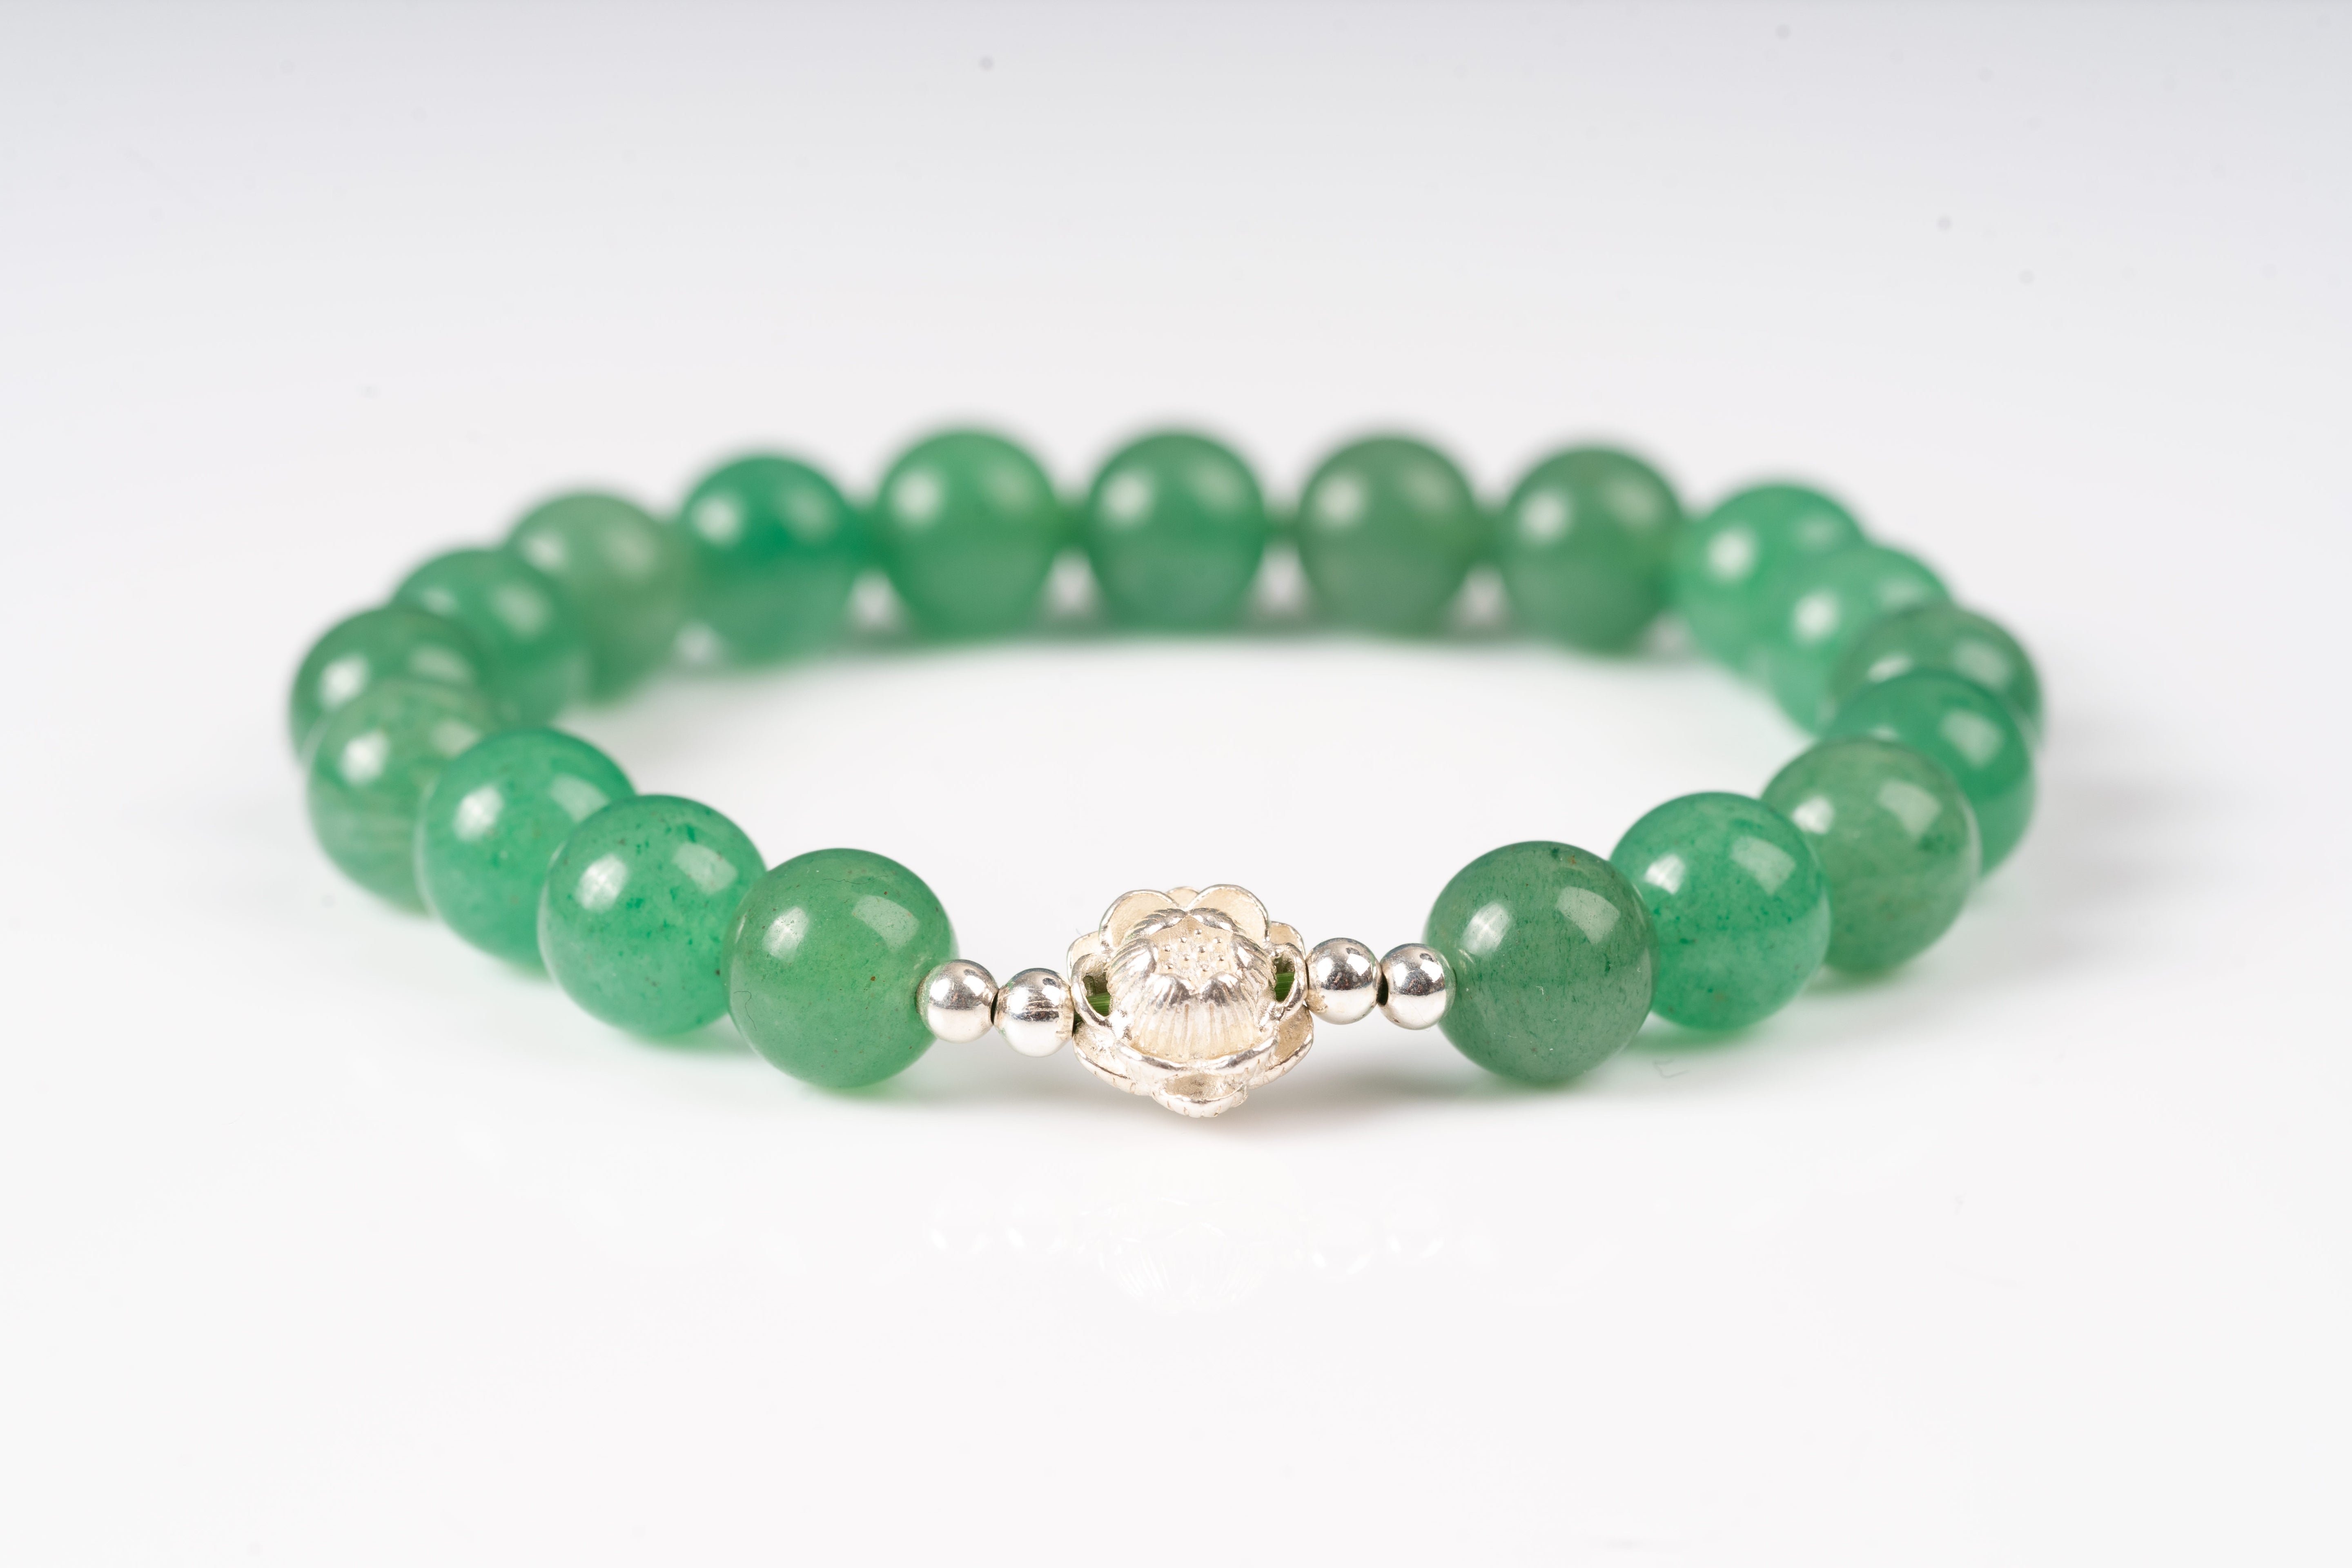 Green aventurine jade Sterling silver bracelet